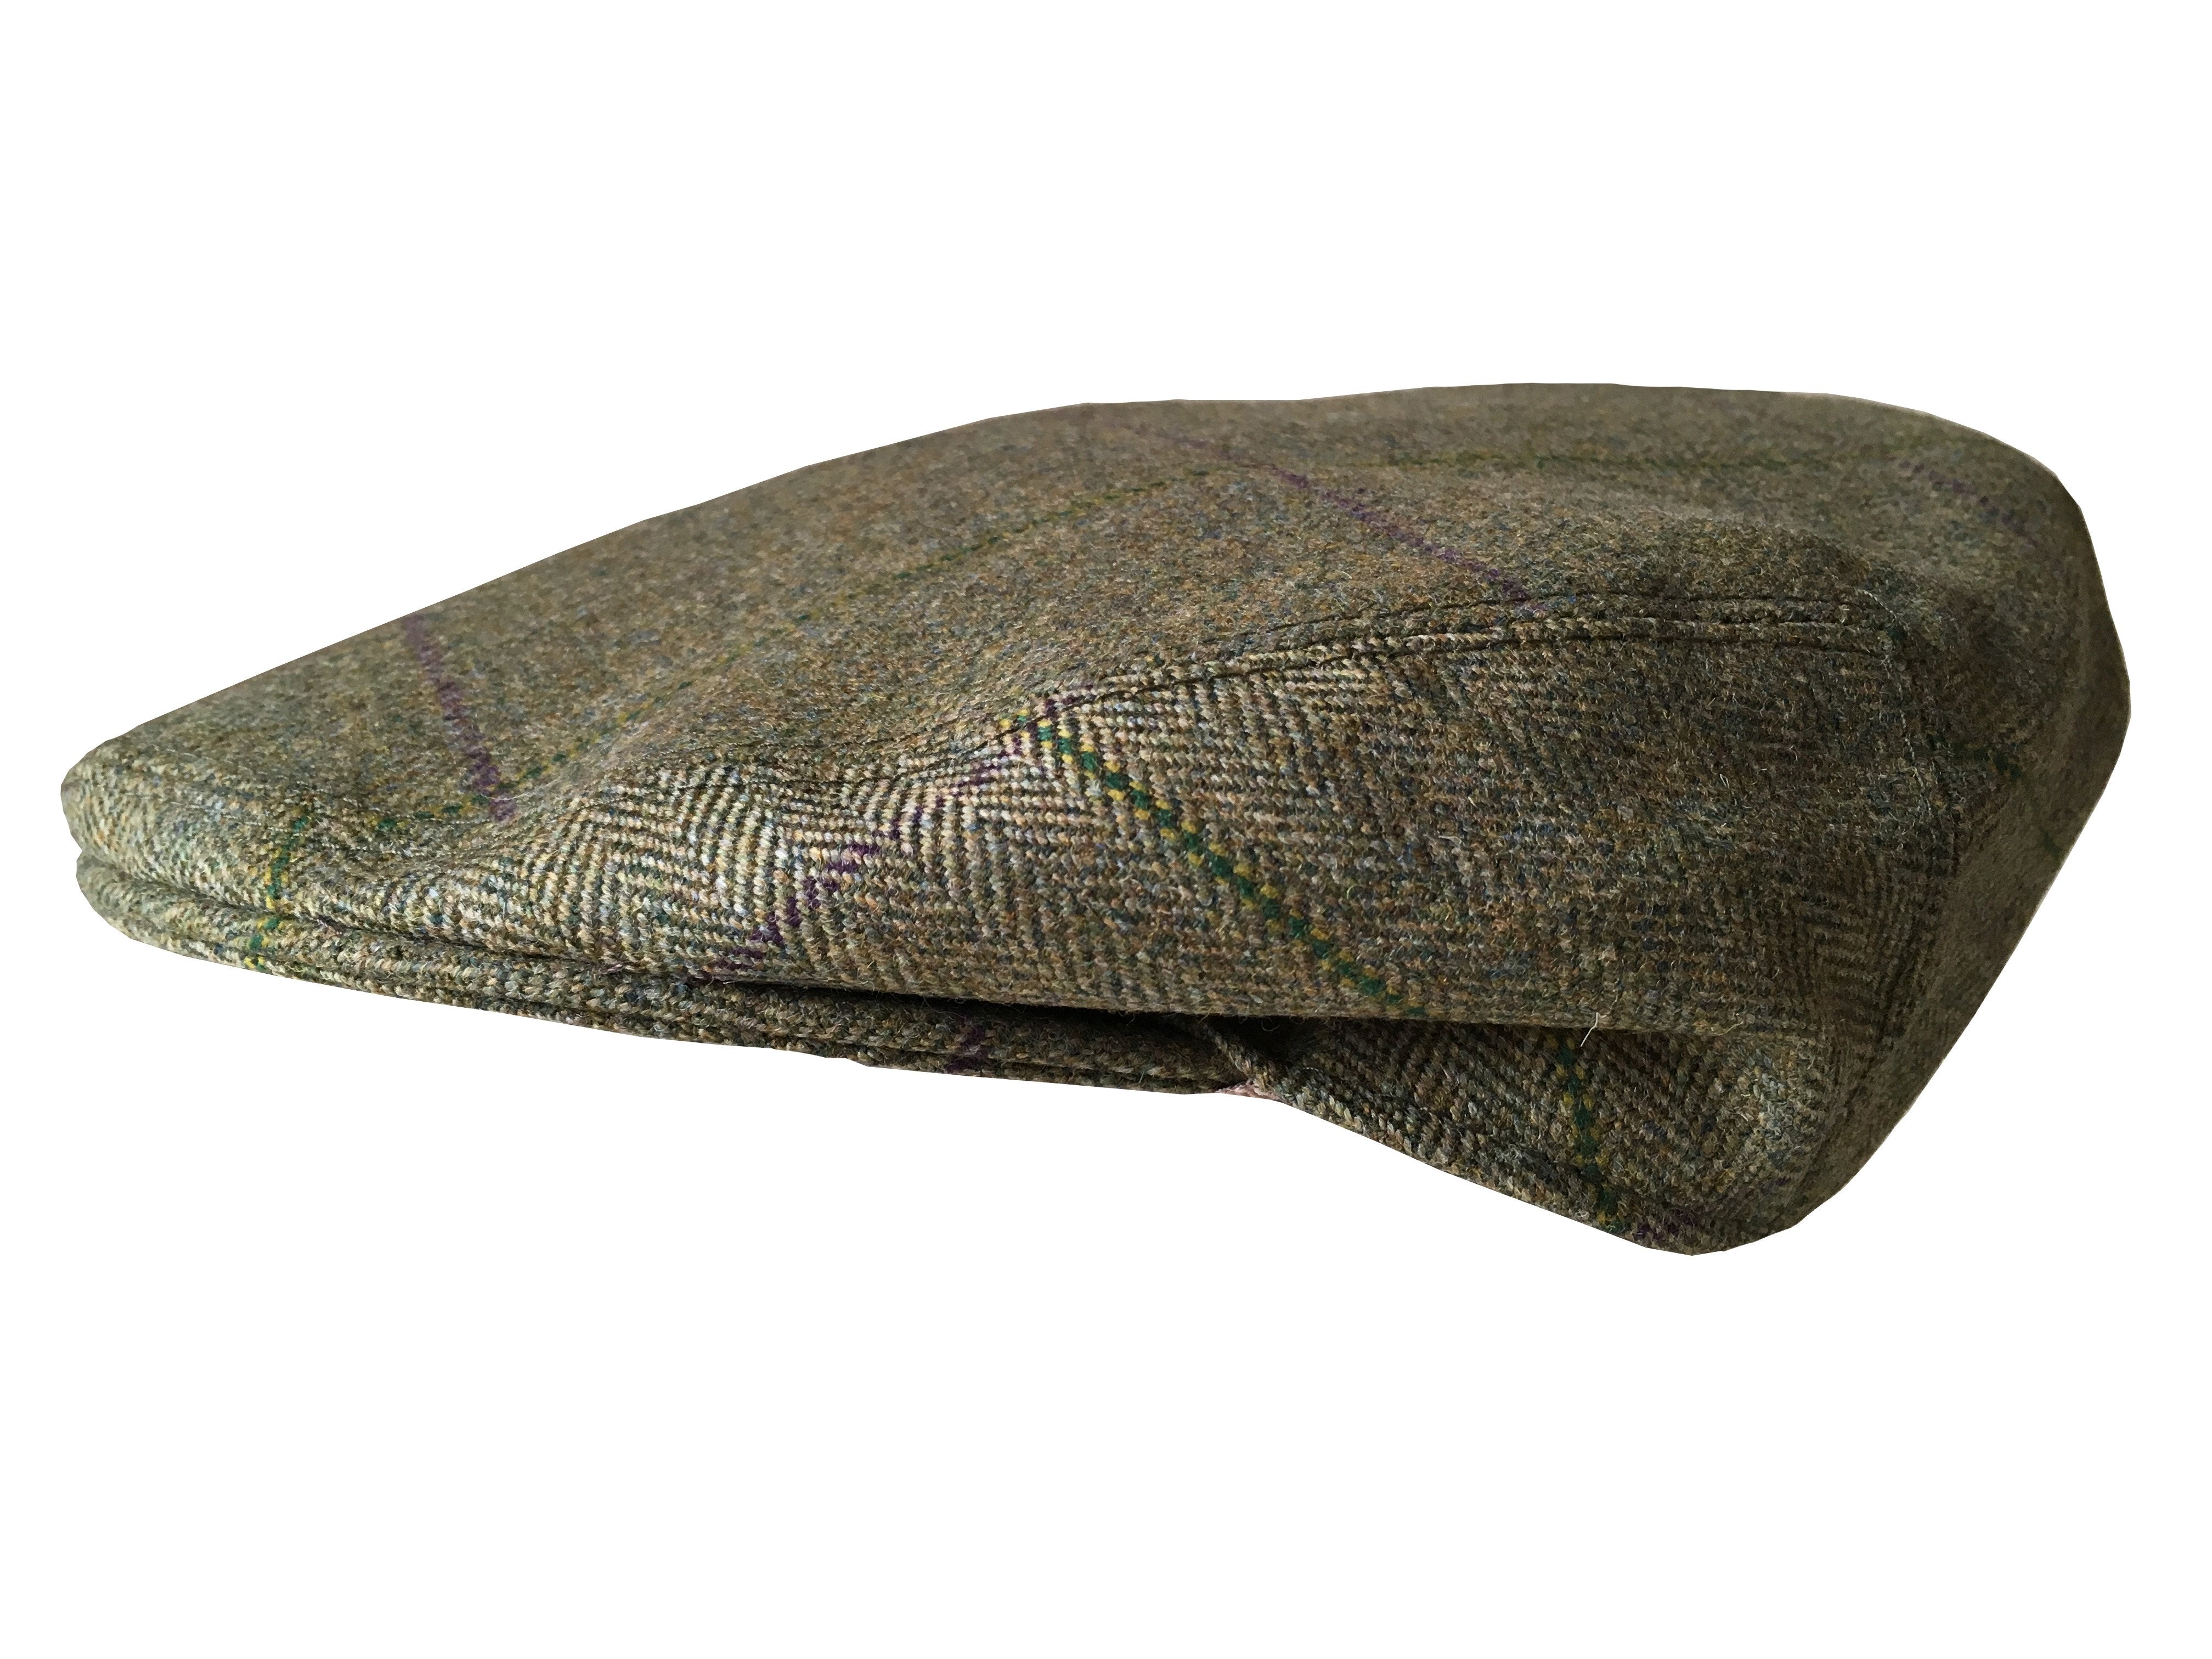 Roxtons - Kinloch Tweed Flat Cap